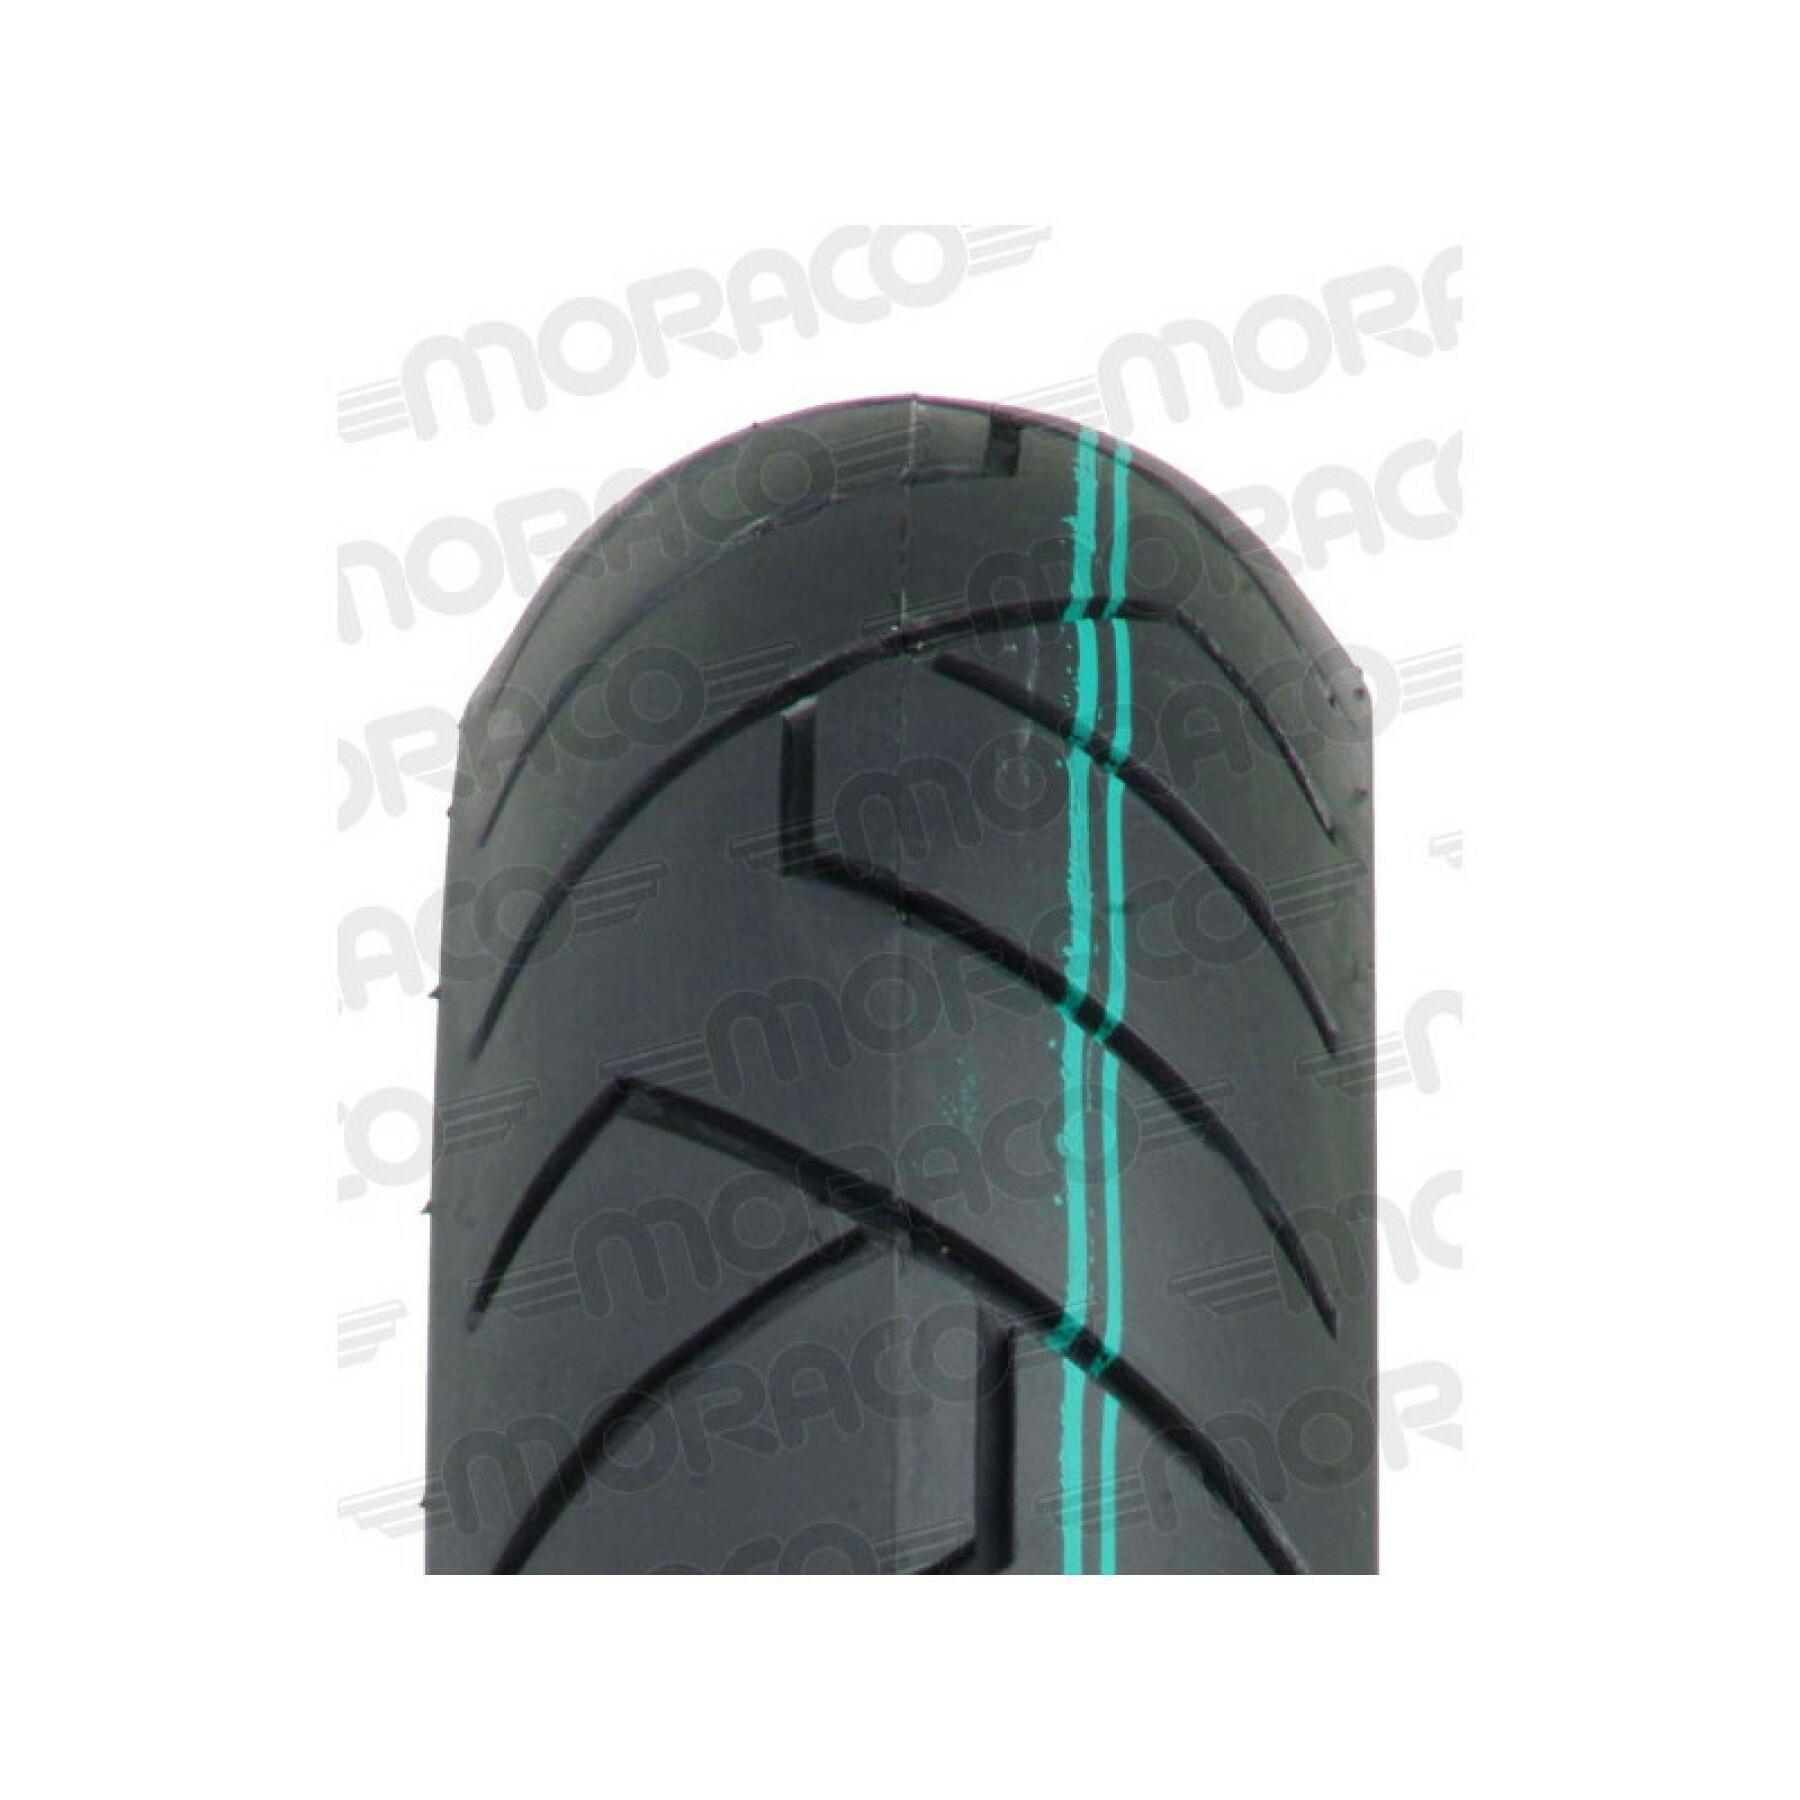 Neumáticos Vee Rubber 120/70-12 VRM 119C TBL (3)